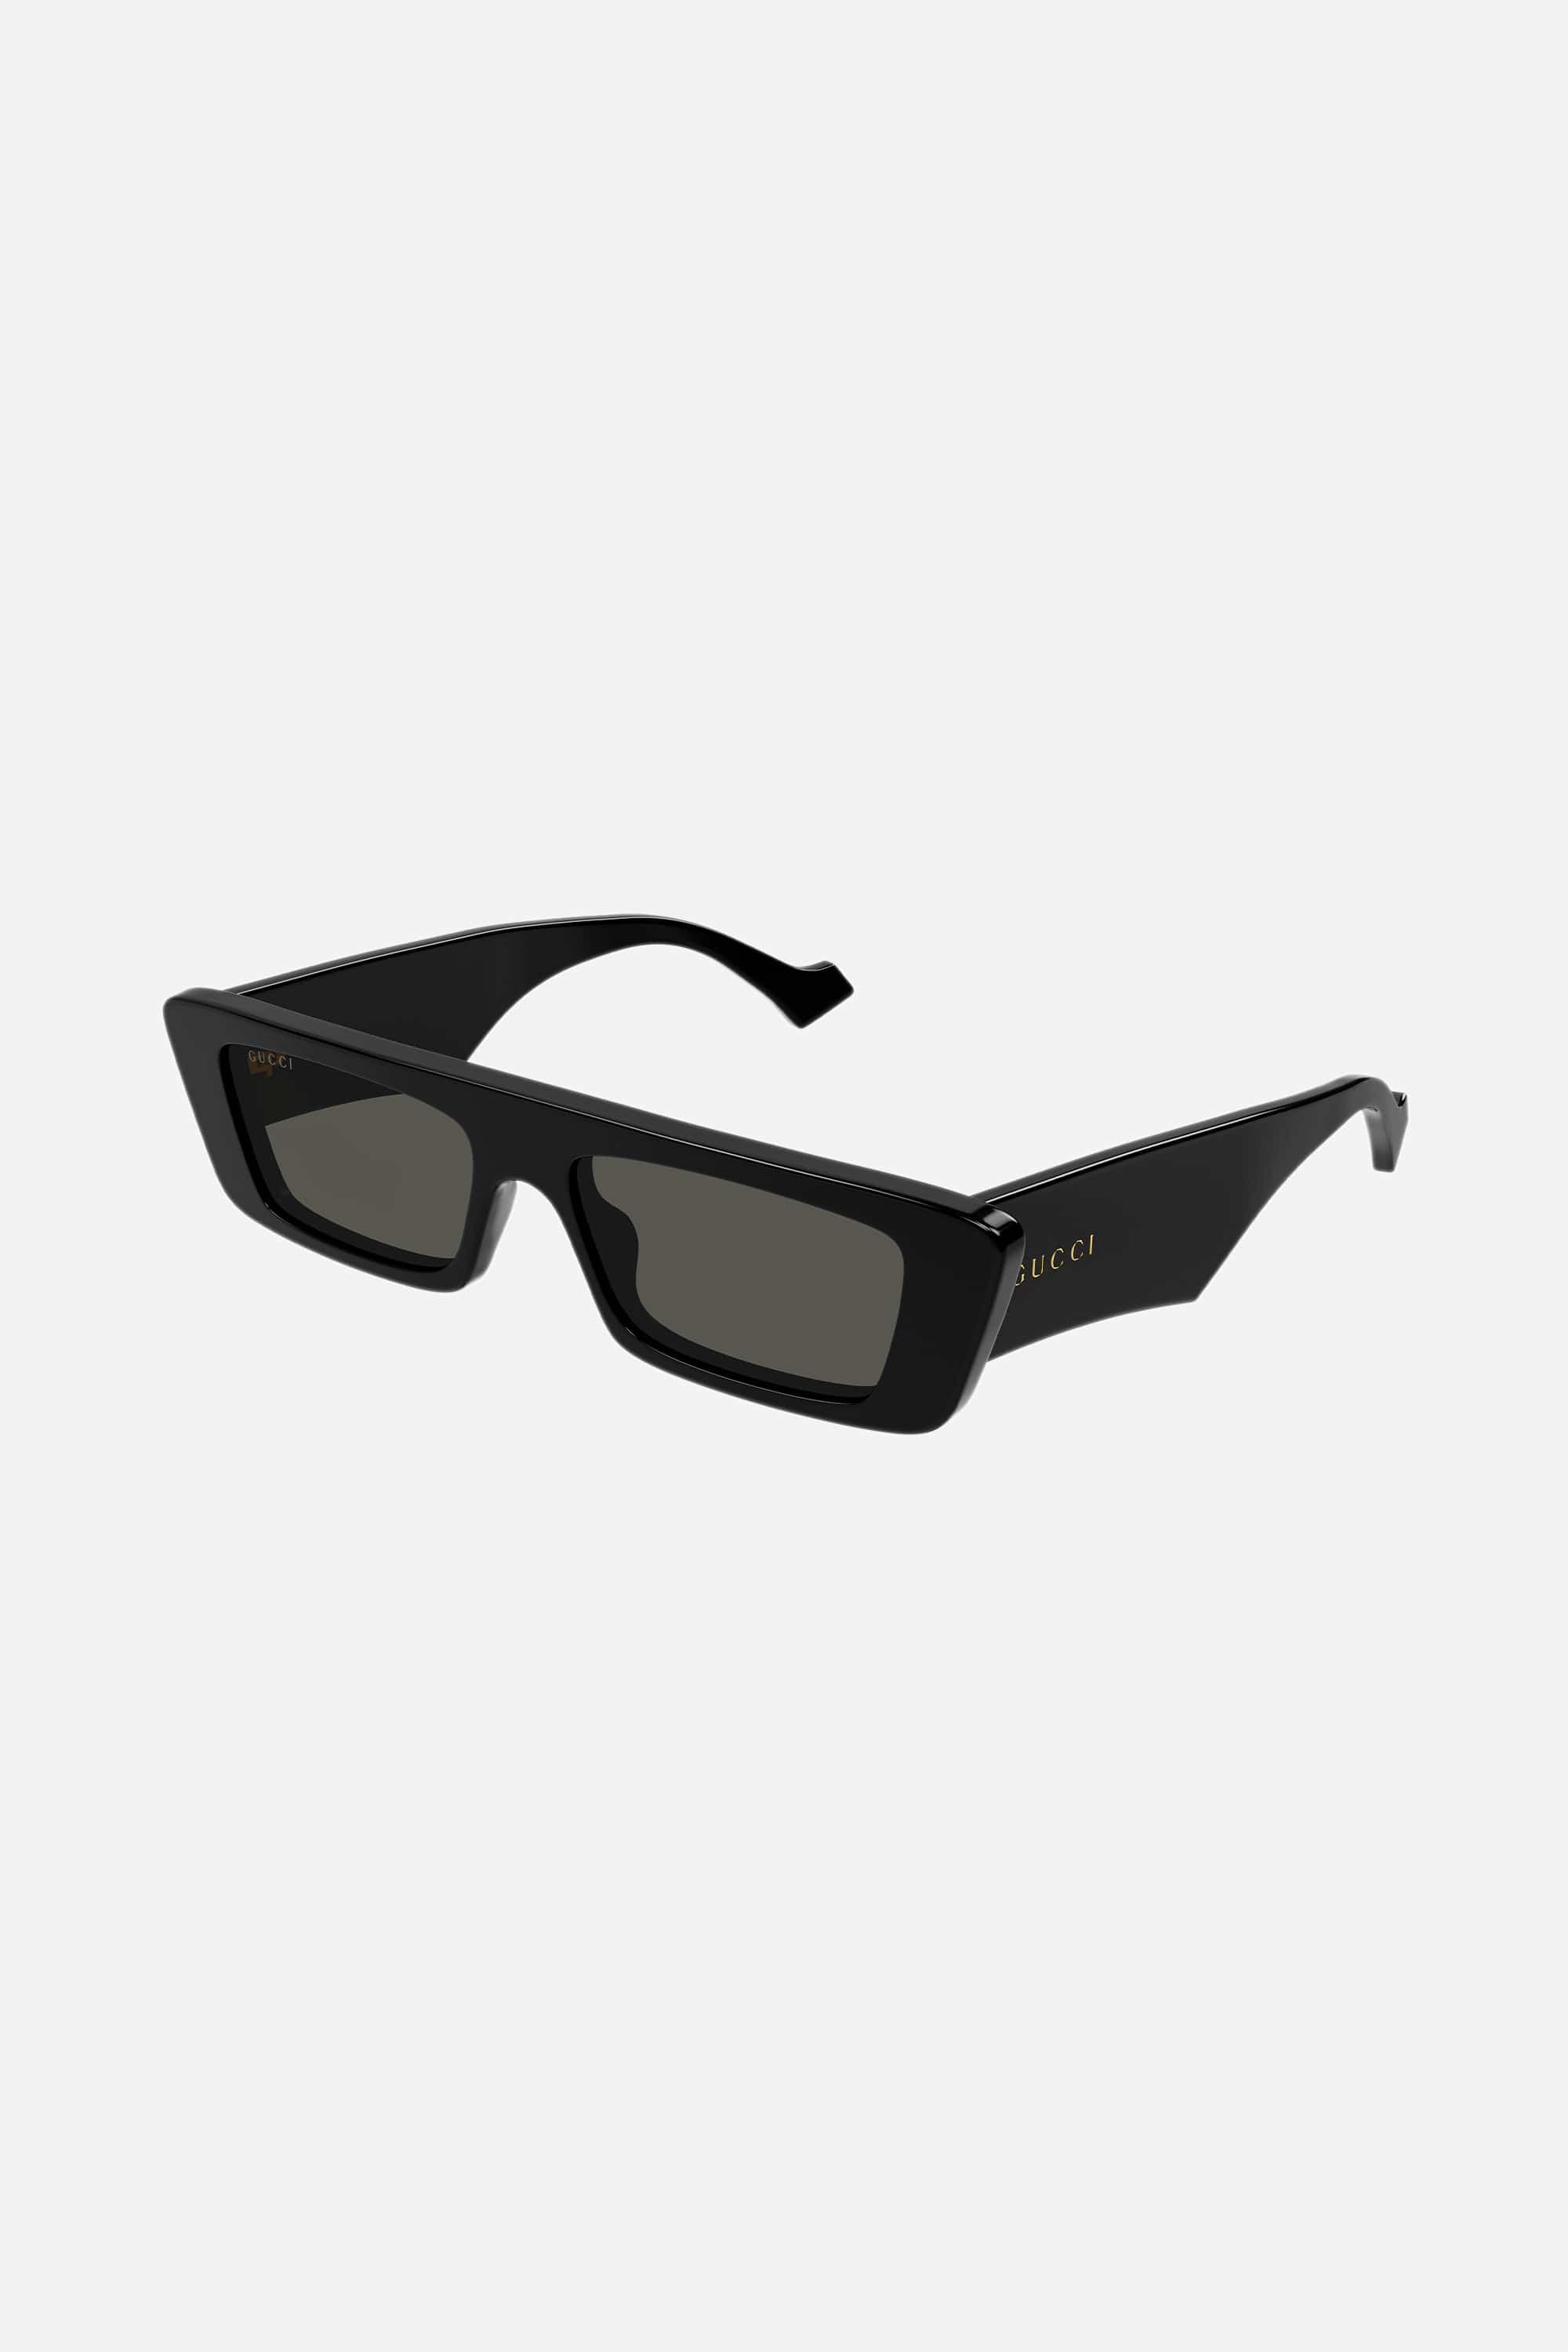 Gucci micro flat top black sunglasses - Eyewear Club